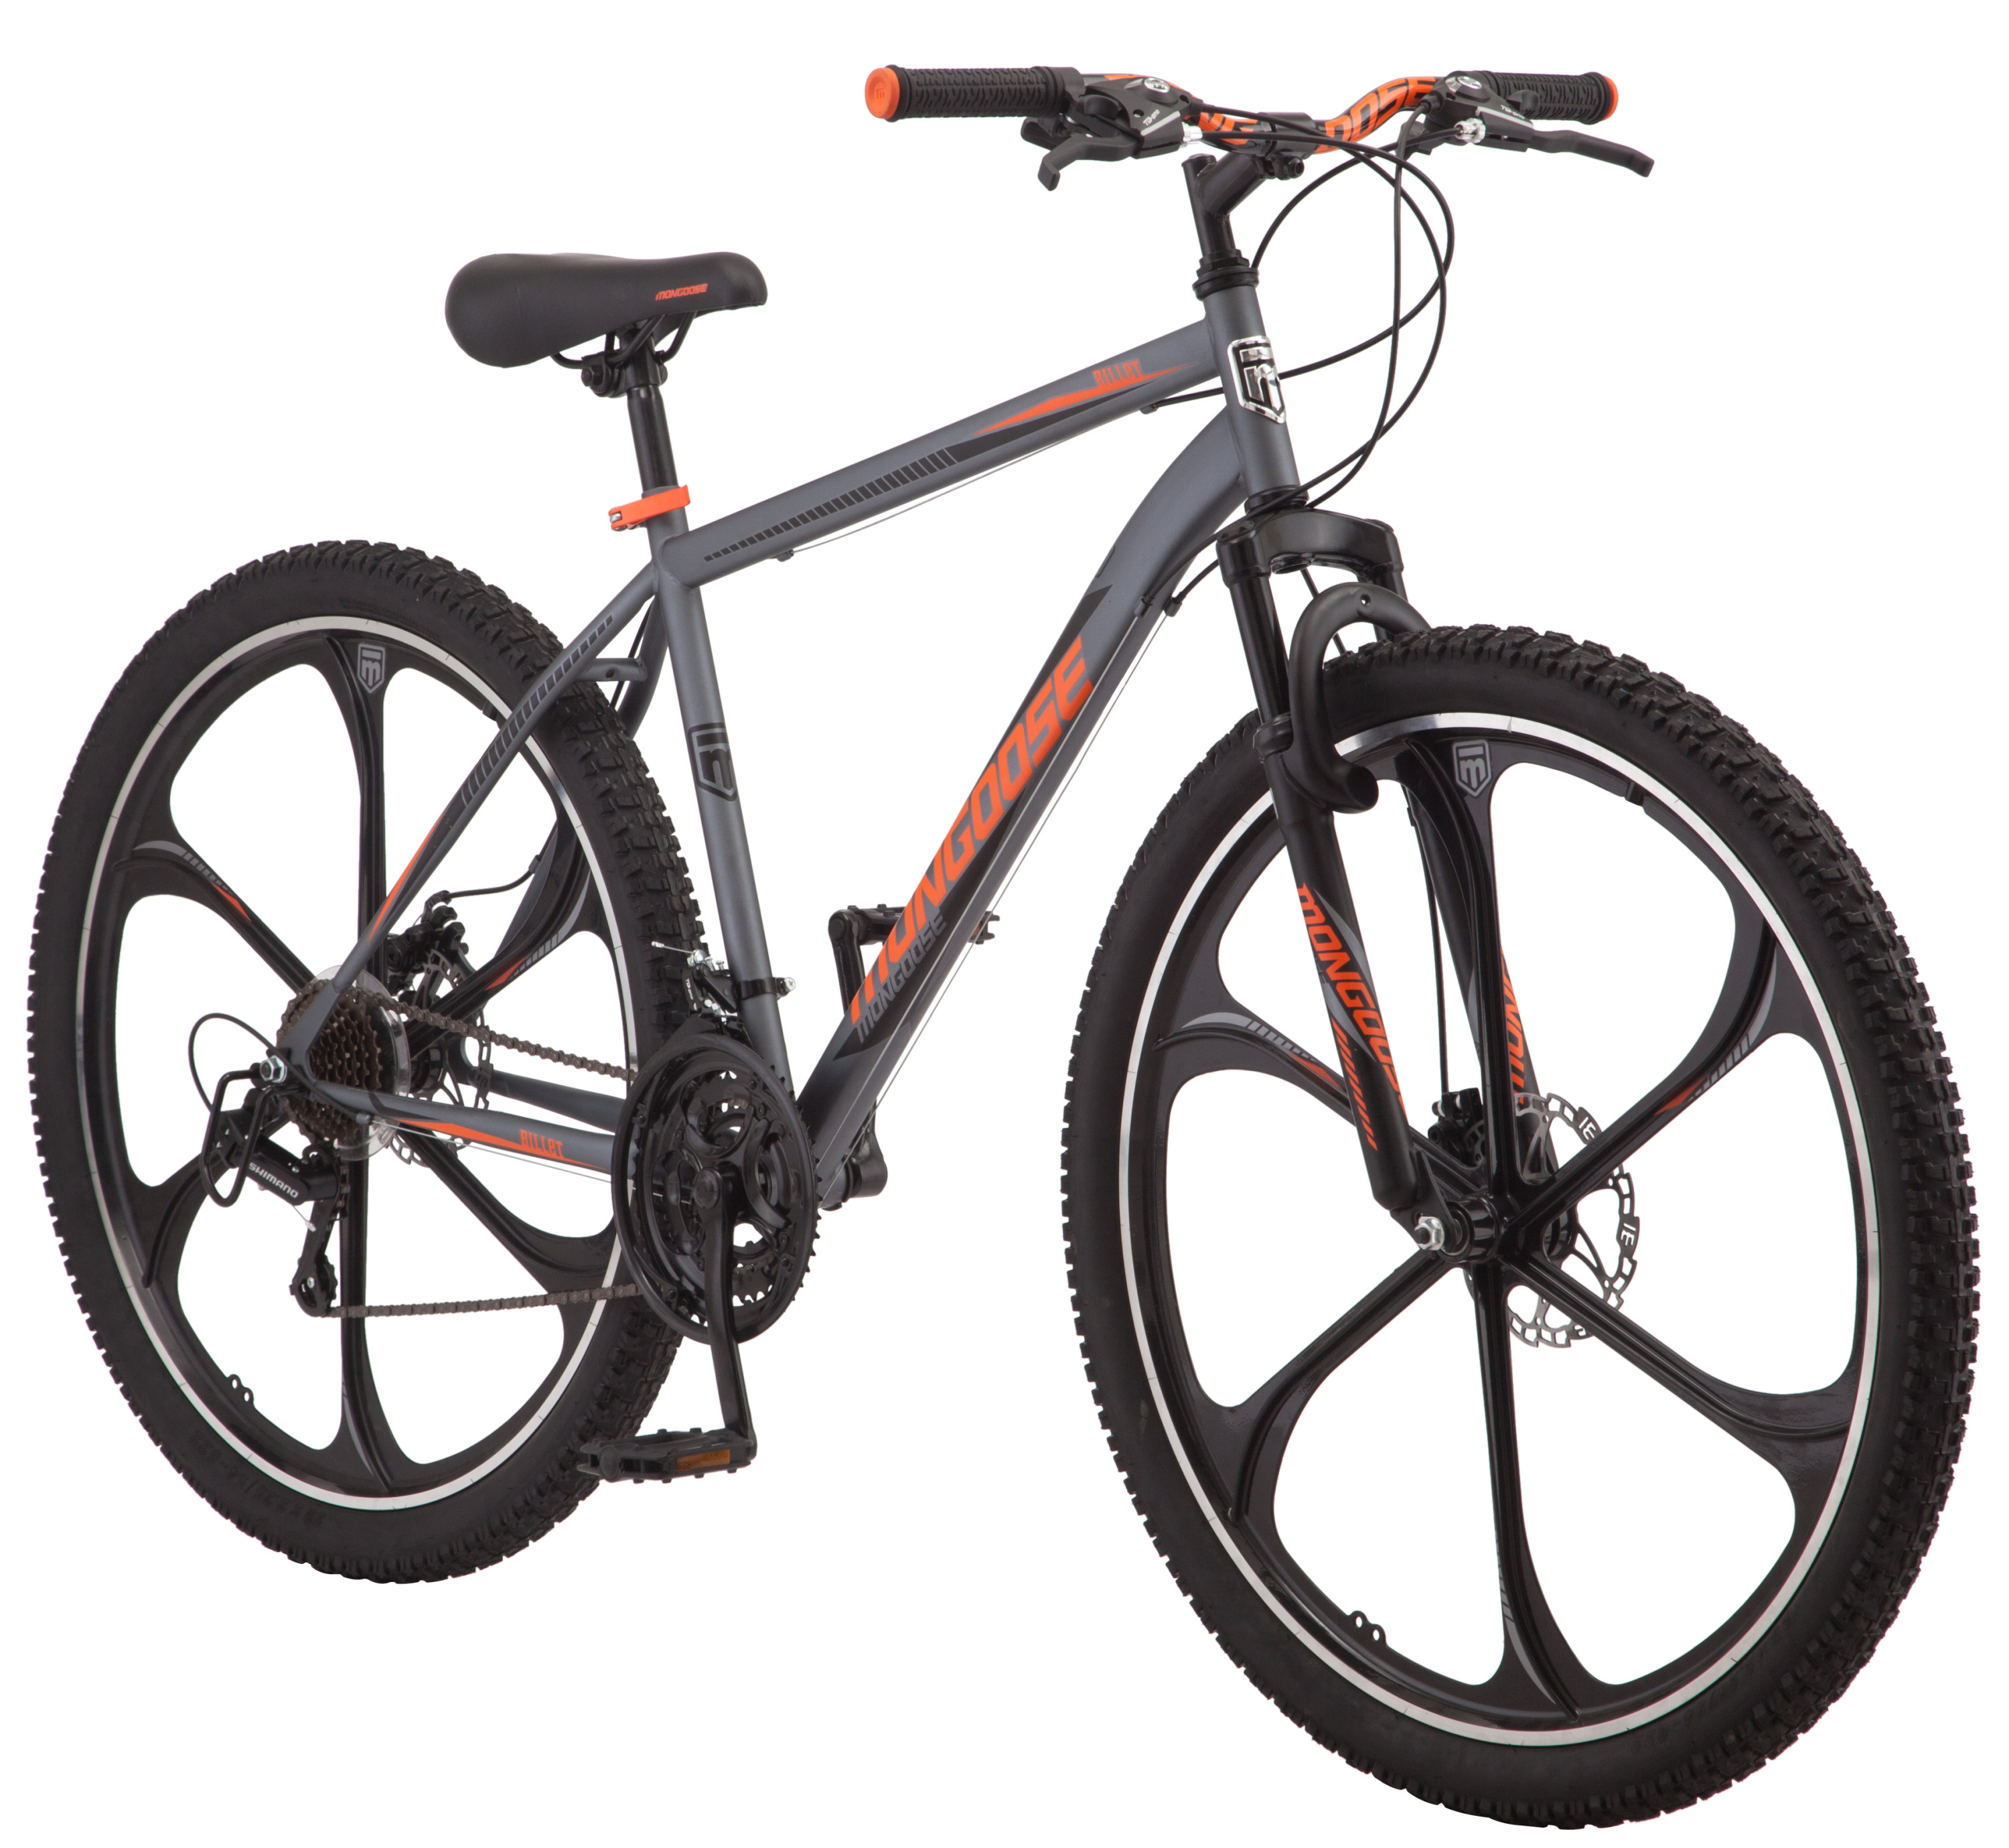 Mongoose Billet Mountain Bike, 21 speed, 29 inch Mag wheels, mens frame, grey - image 1 of 8